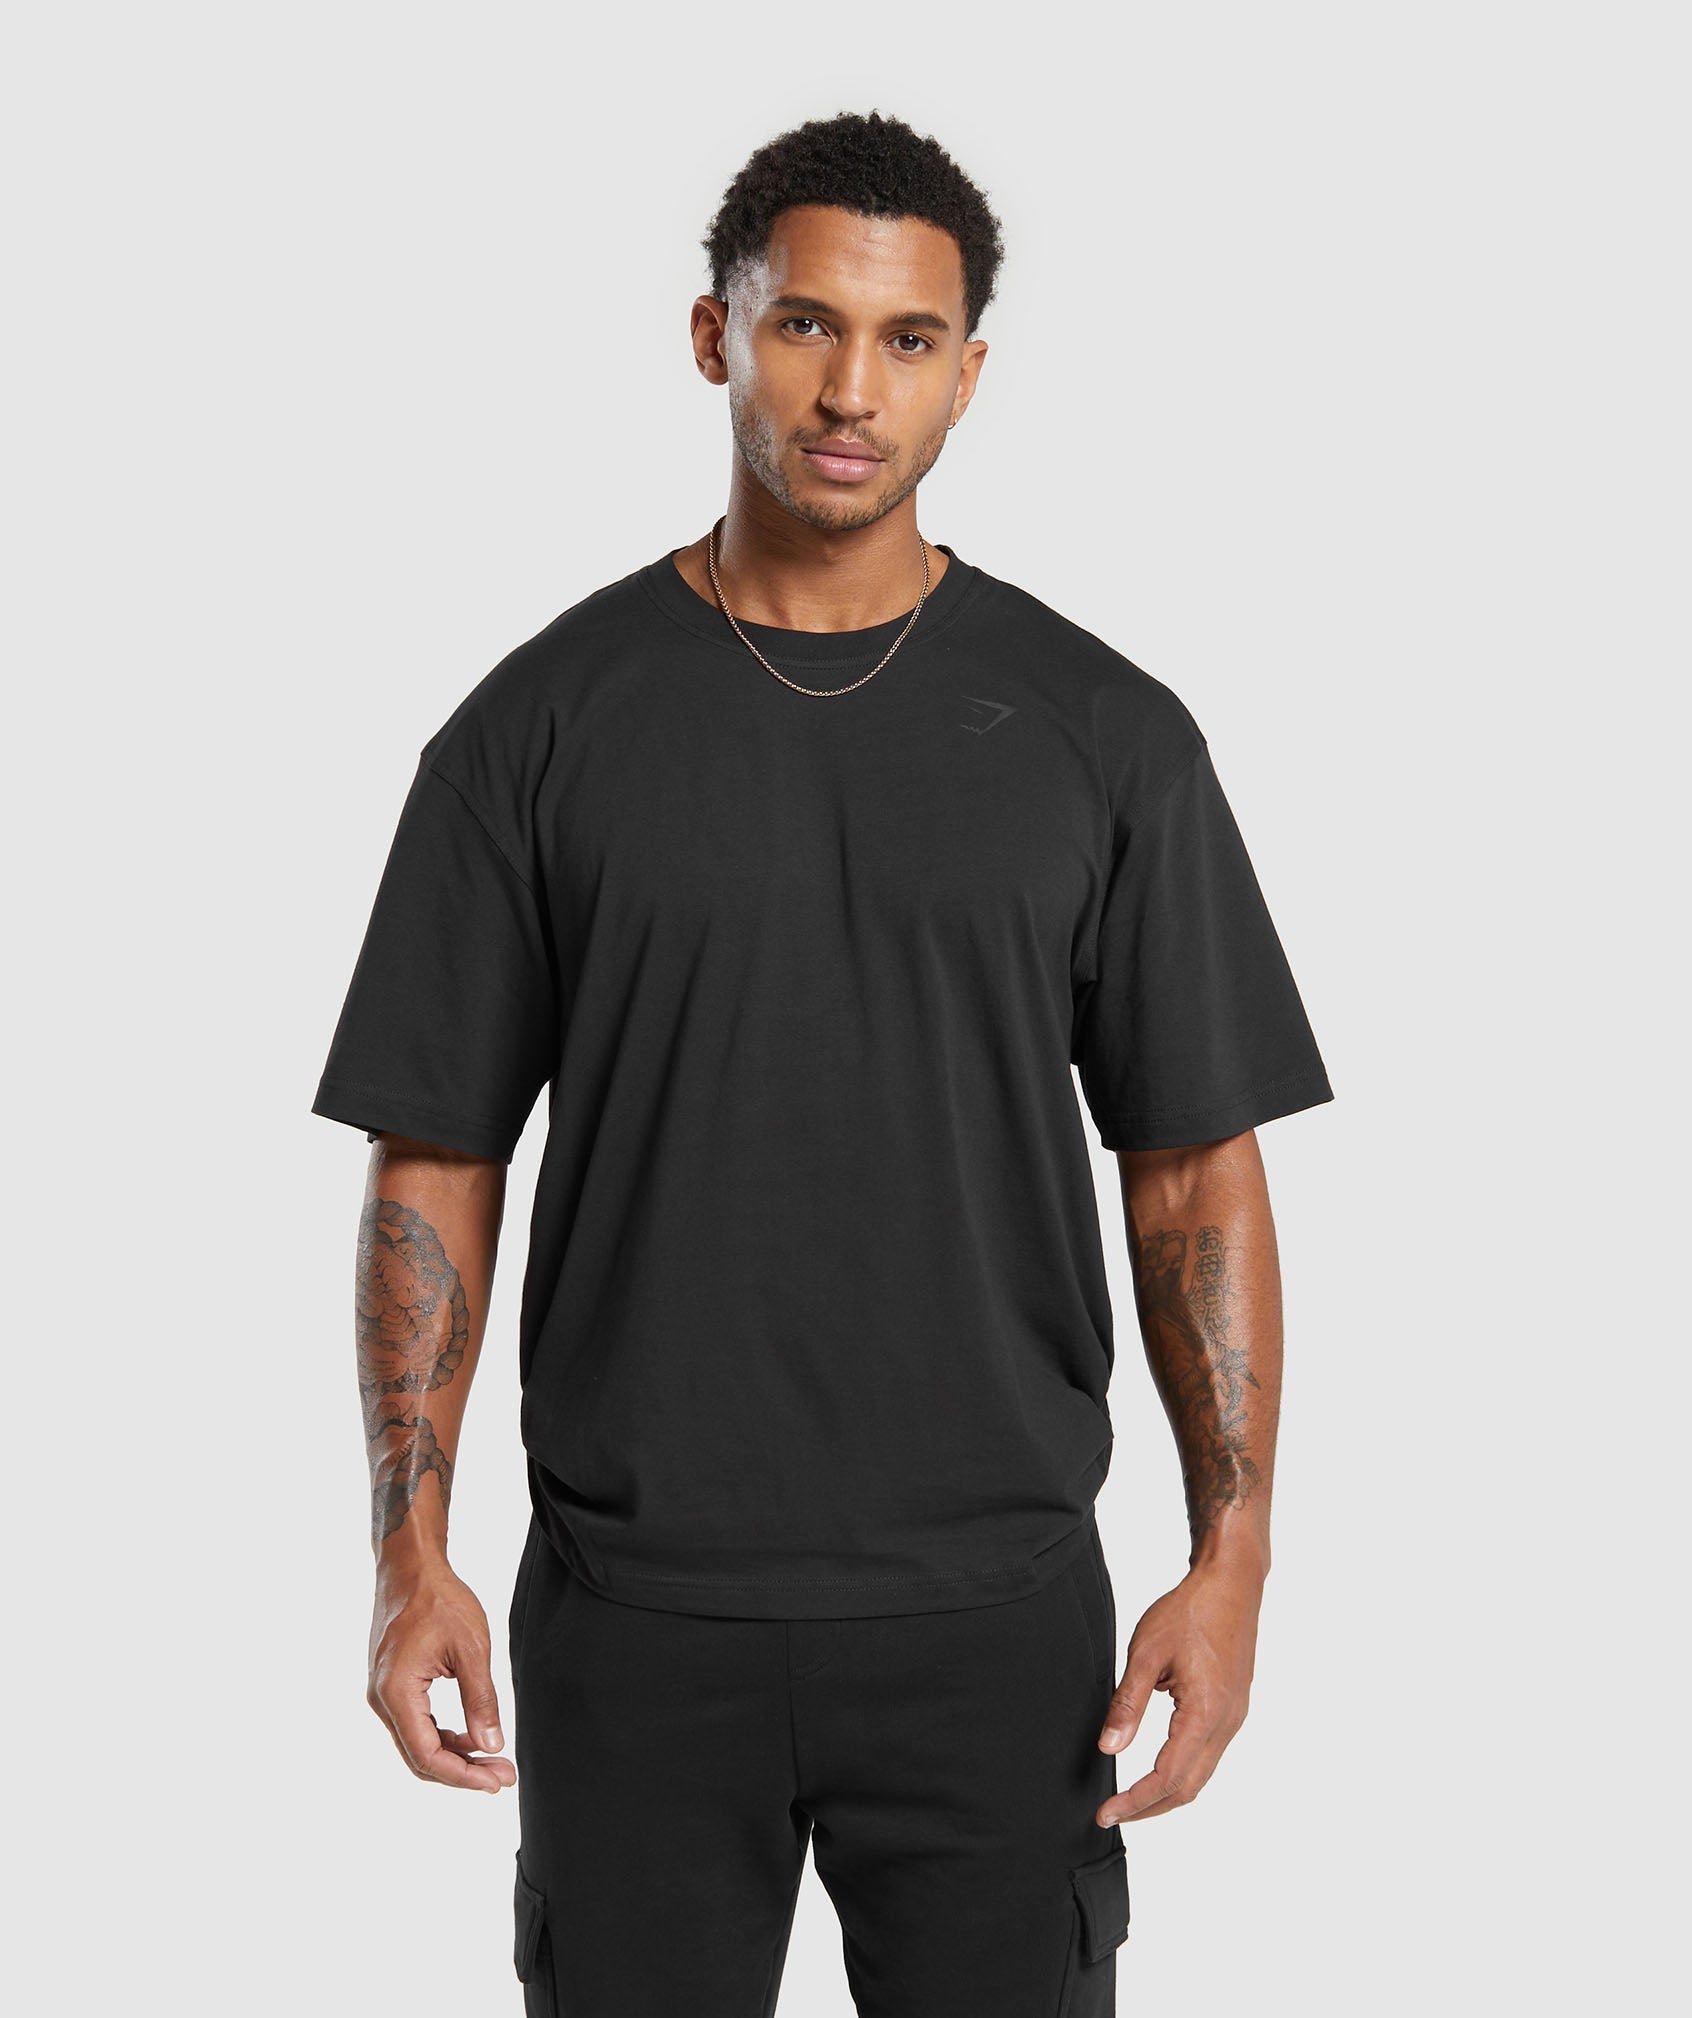 Power T-Shirt in Black